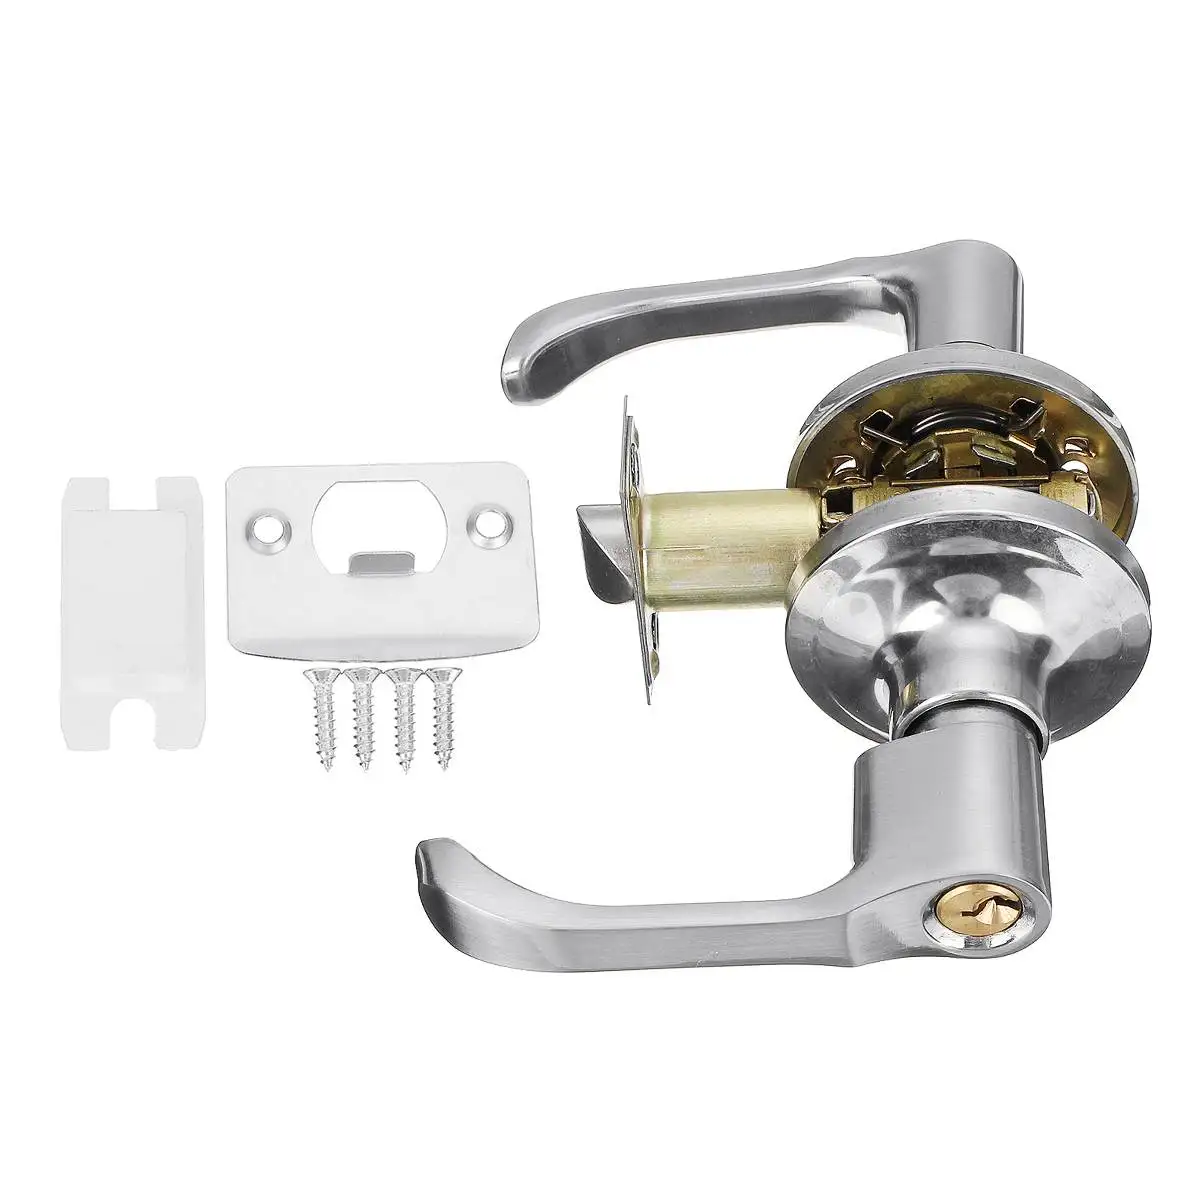 

Stainless Steel Mechanical Door Lock Home Security Latch Lock Keys Kit Bathroom Bedroom Door Hardware Security Handled Locks